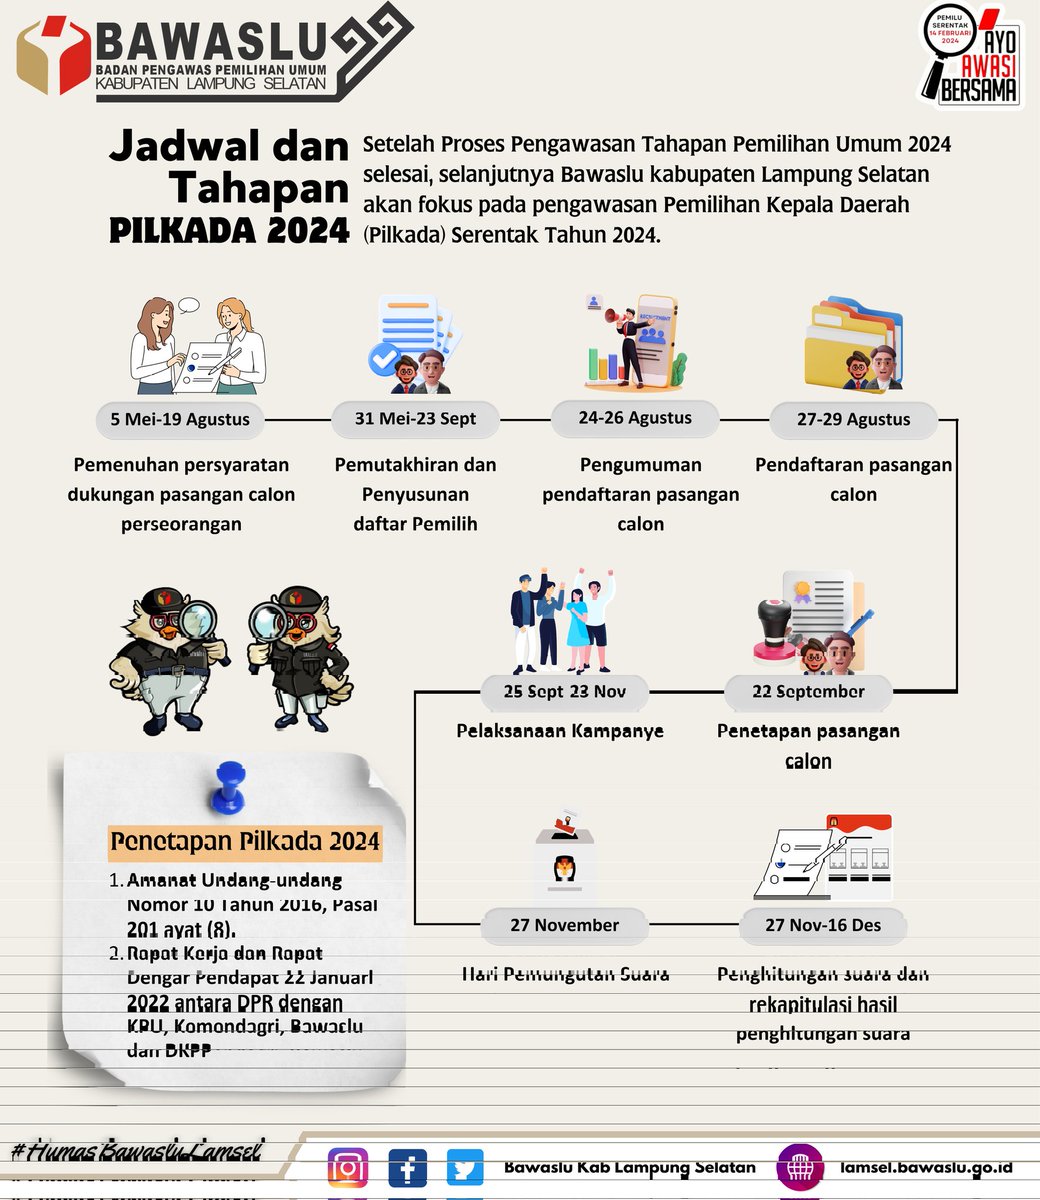 #SahabatBawaslu Setelah Proses Pengawasan Tahapan Pemilihan Umum 2024 selesai, selanjutnya Bawaslu kabupaten Lampung Selatan akan fokus pada pengawasan Pemilihan Kepala Daerah (Pilkada) Serentak Tahun 2024.

Berikut jadwal dan tahapan pilkada 2024.